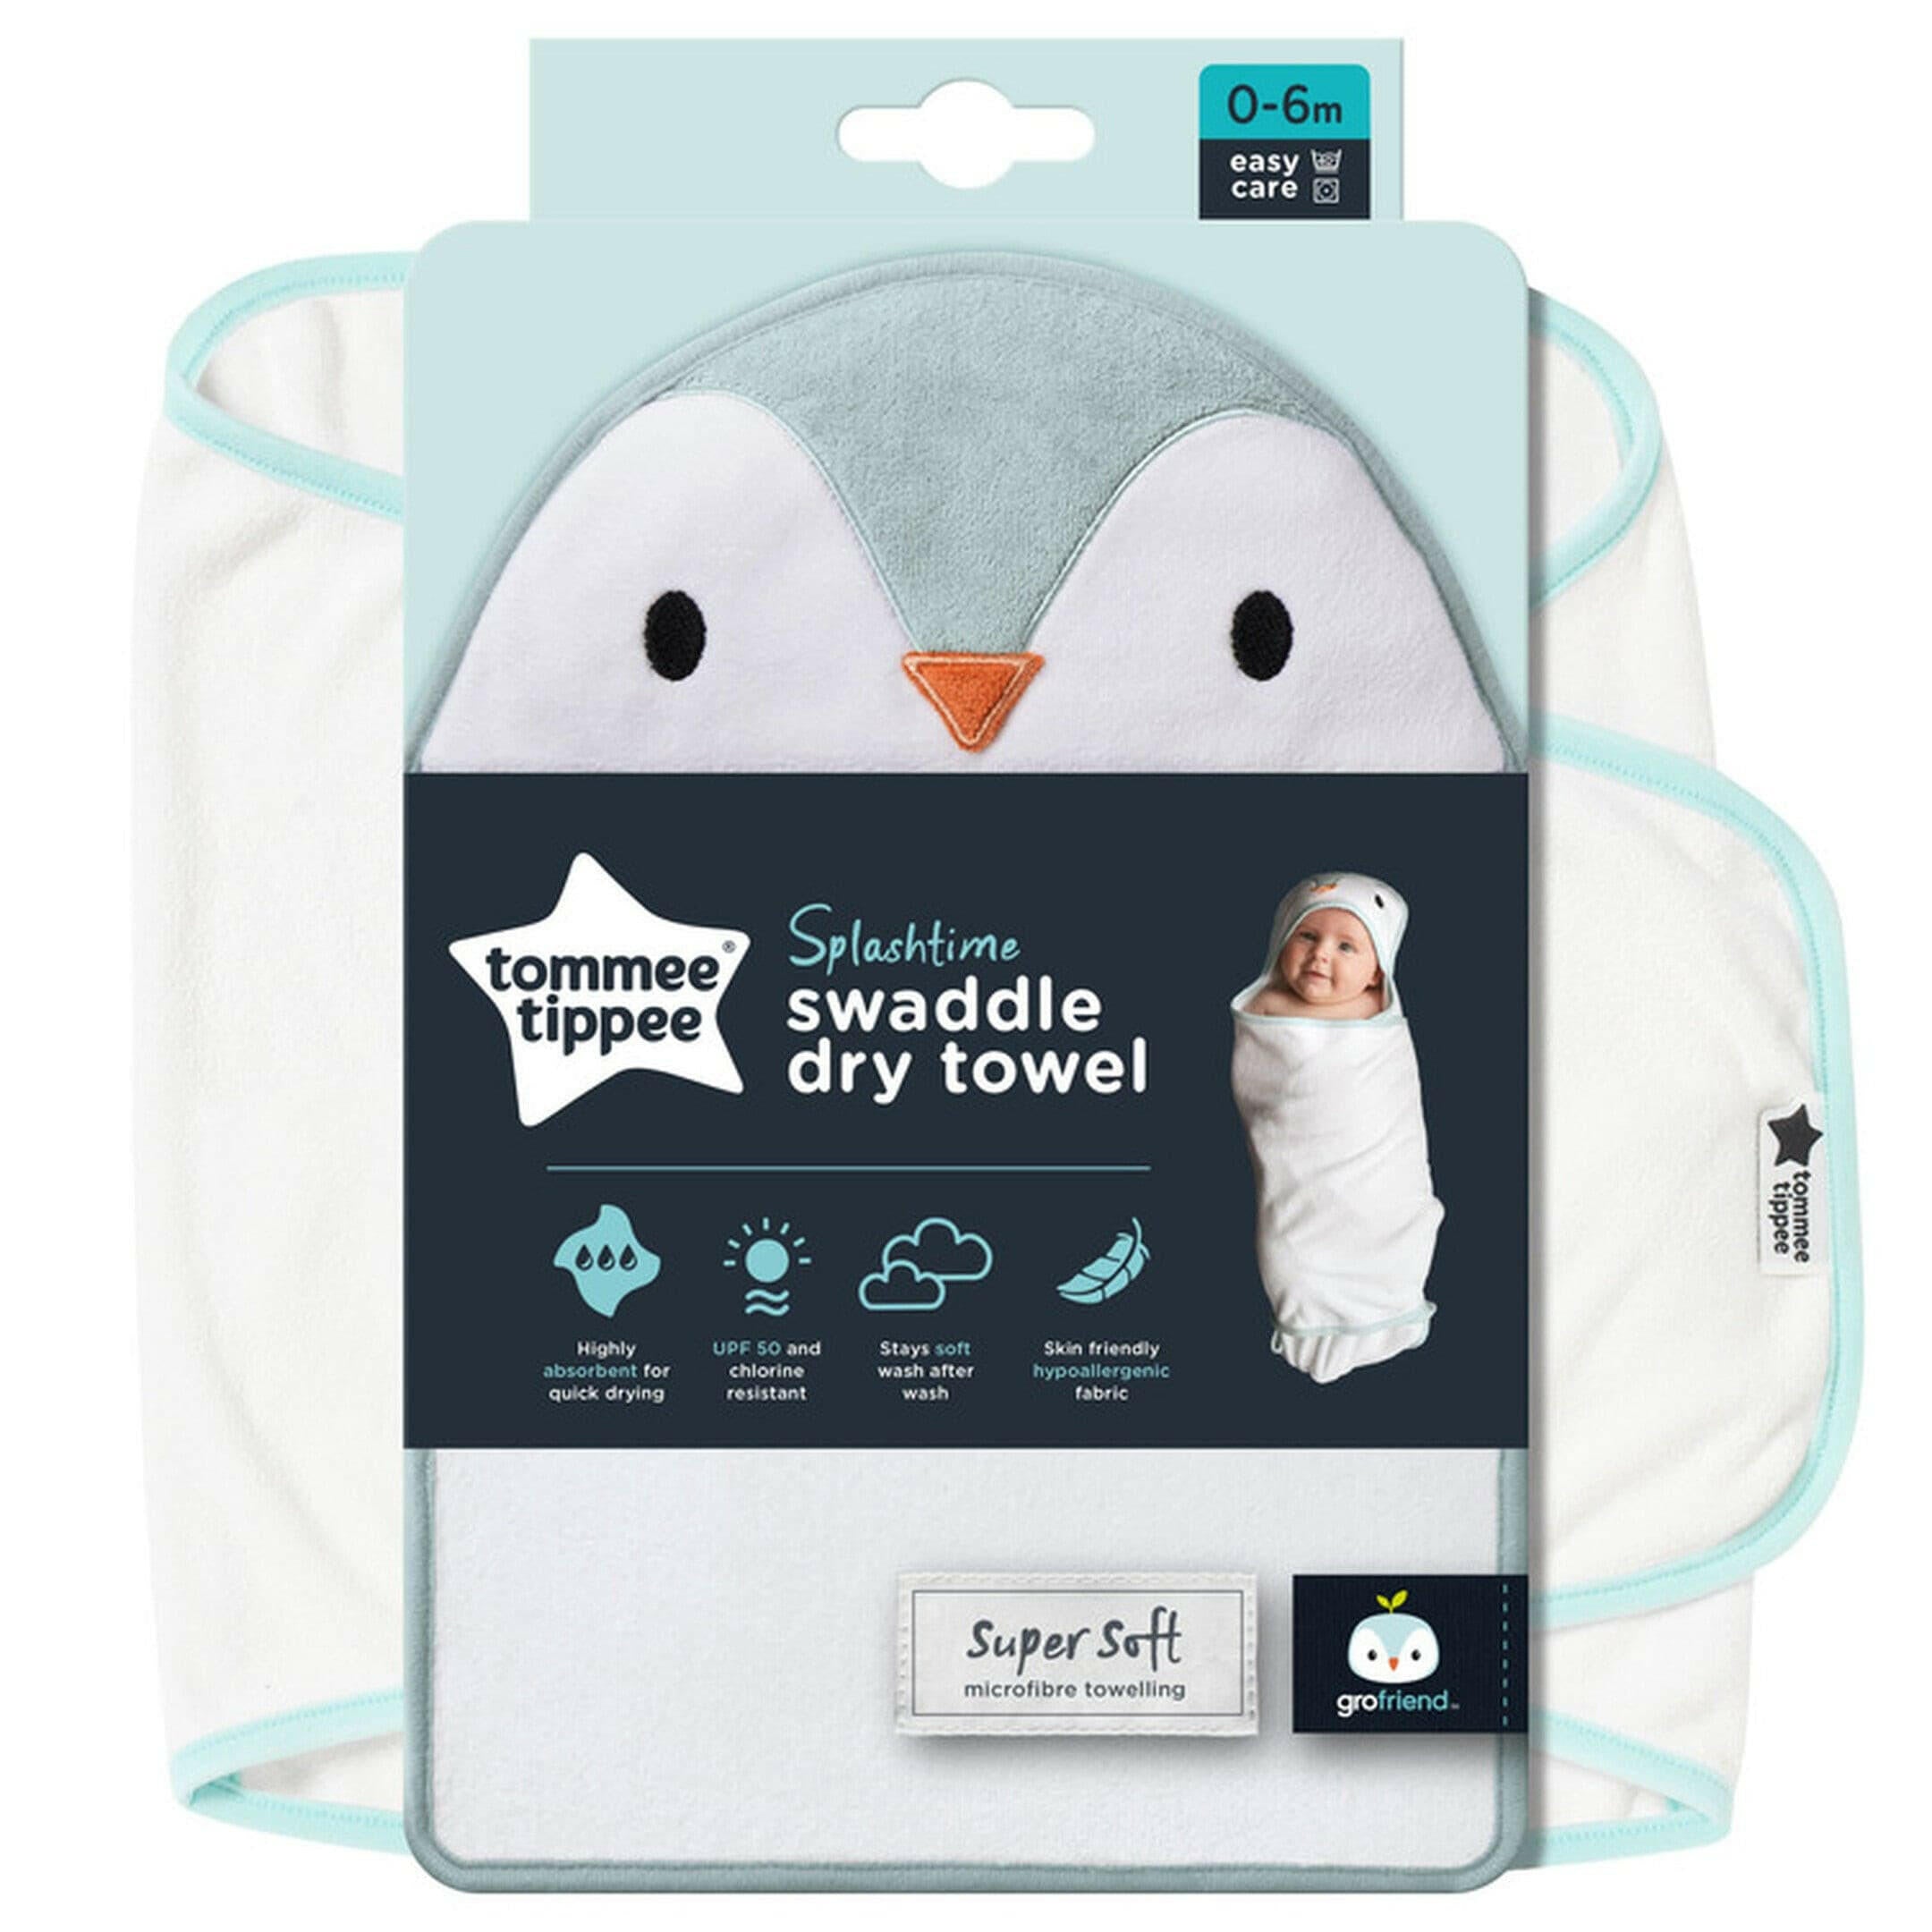 Tommee Tippee Splashtime Newborn Swaddle Dry Towel 0-6 months.